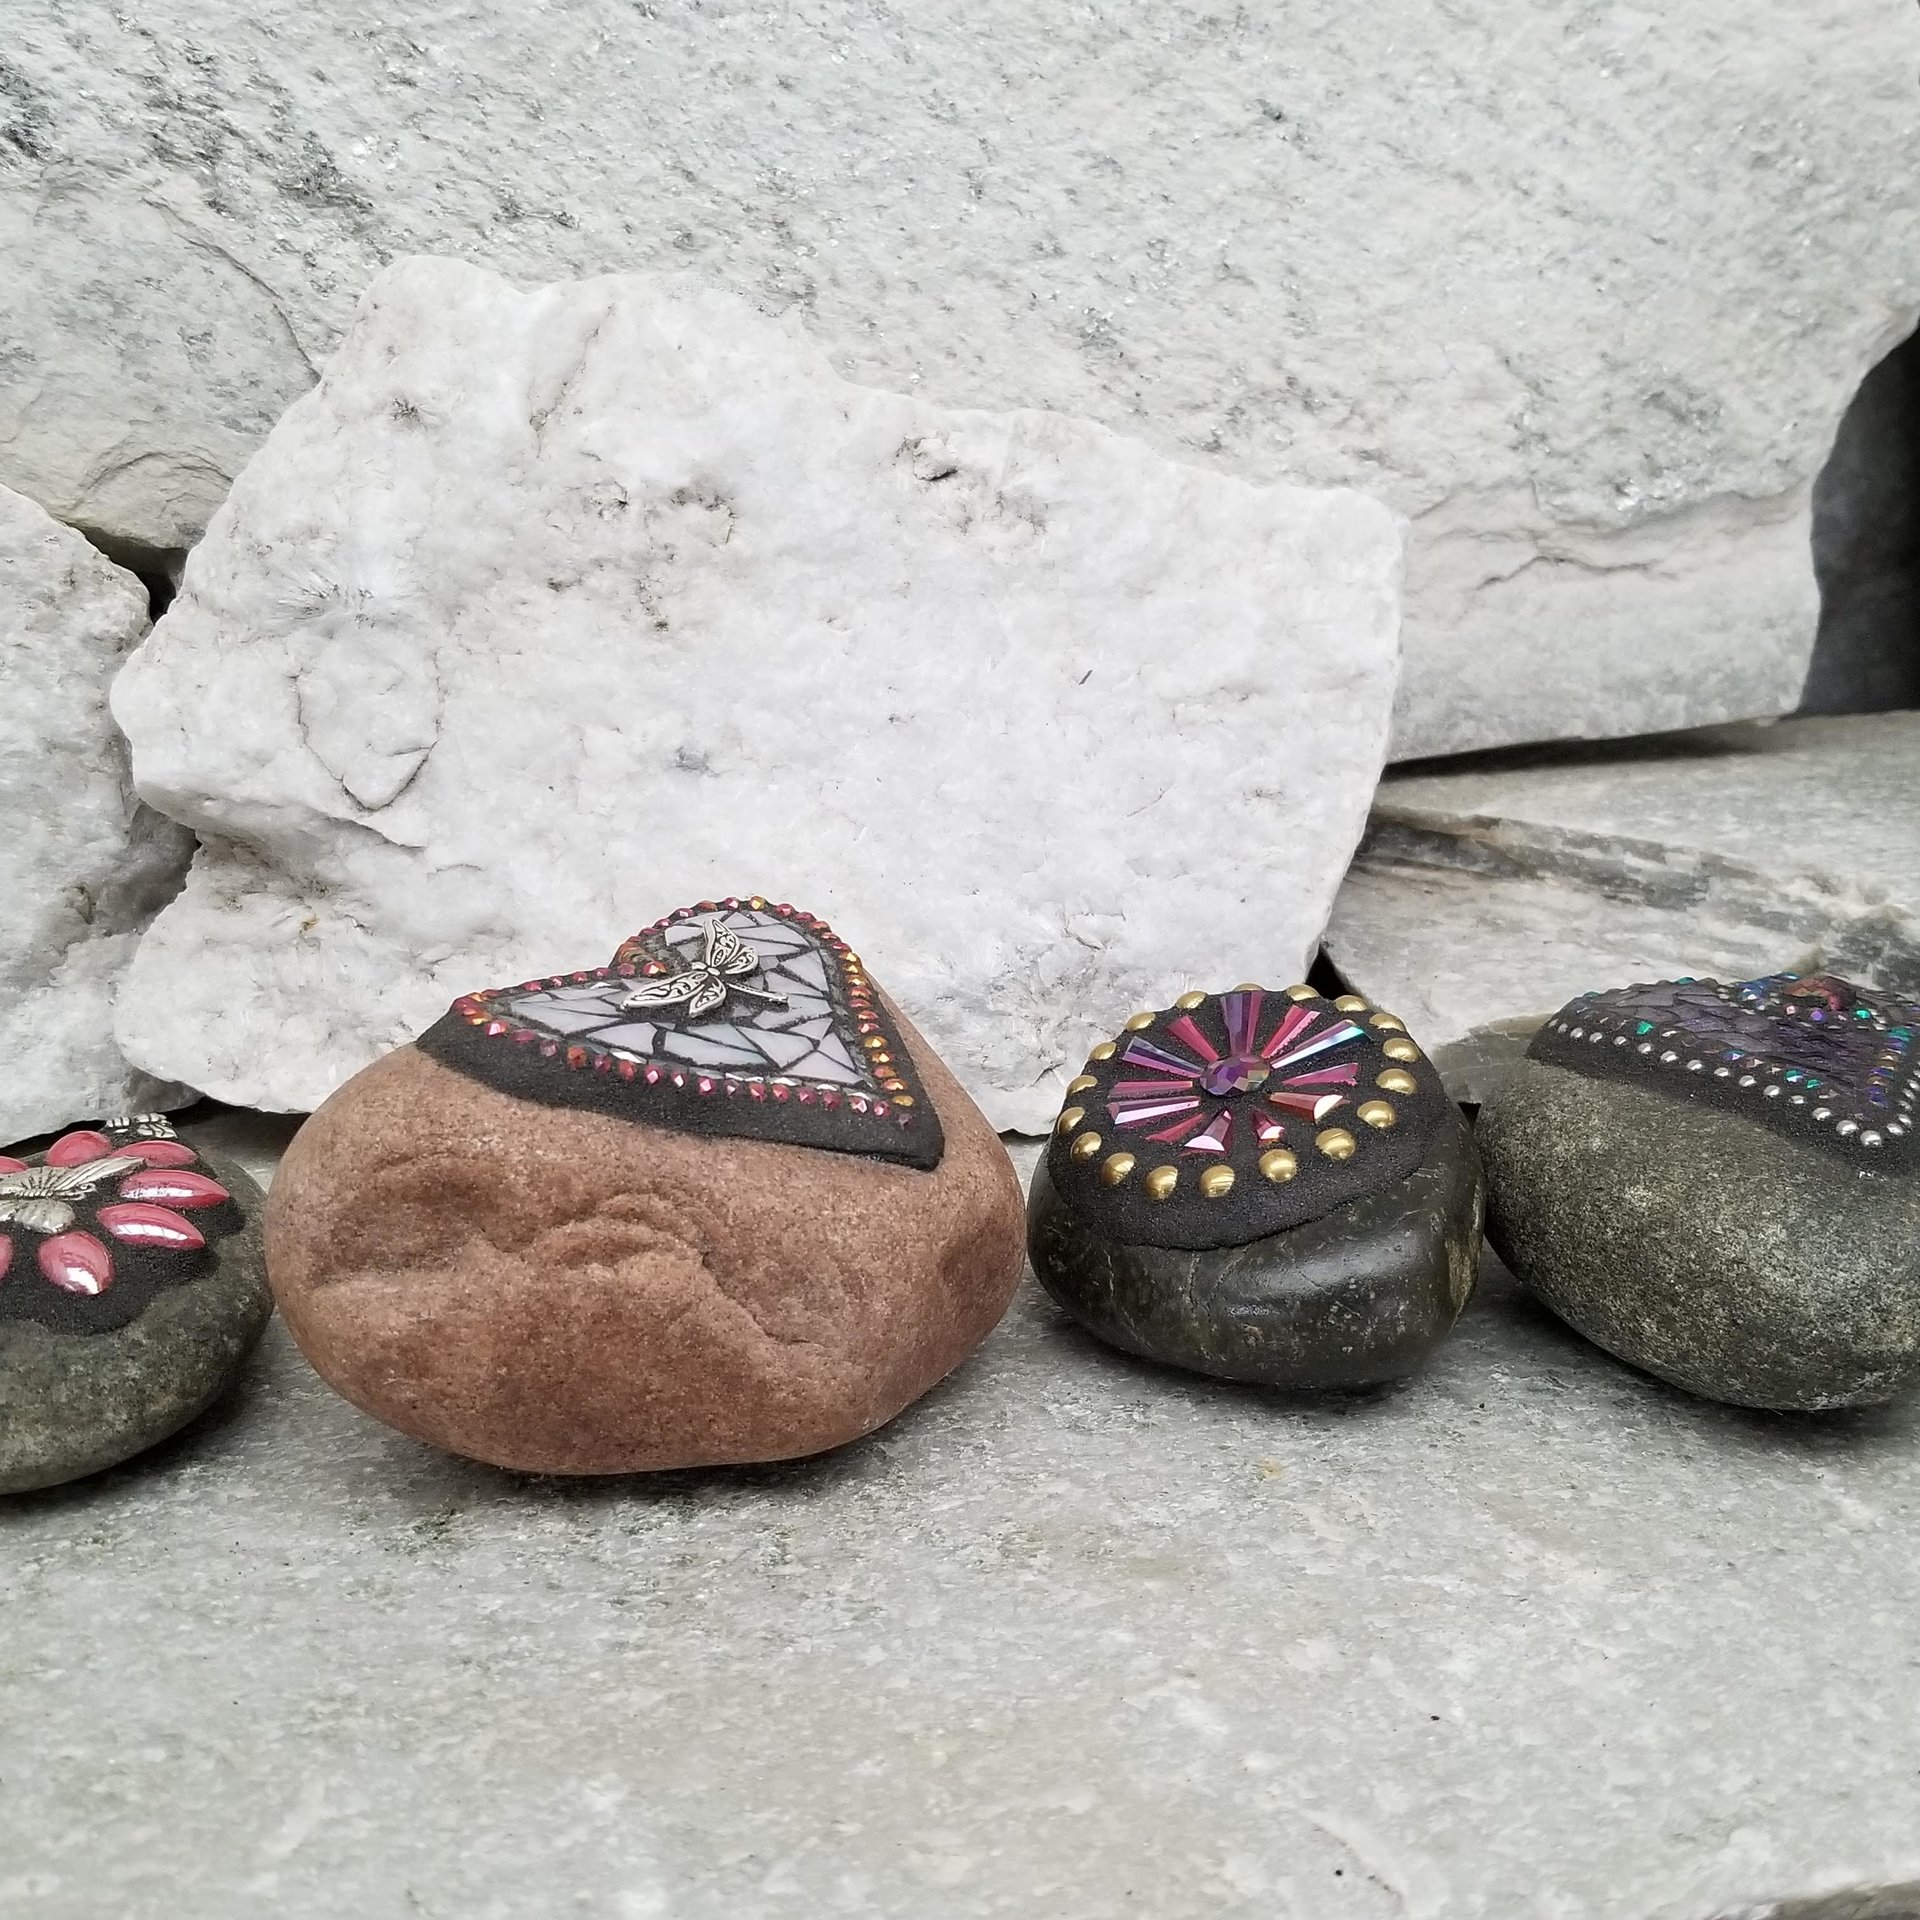 Garden Stone Paperweights, Secret Santa Stocking Stuffer, #2 Group Mosaic Heart and Rocks, Mosaic Garden Stone, Home Decor, Gardening, Gardening Gift,